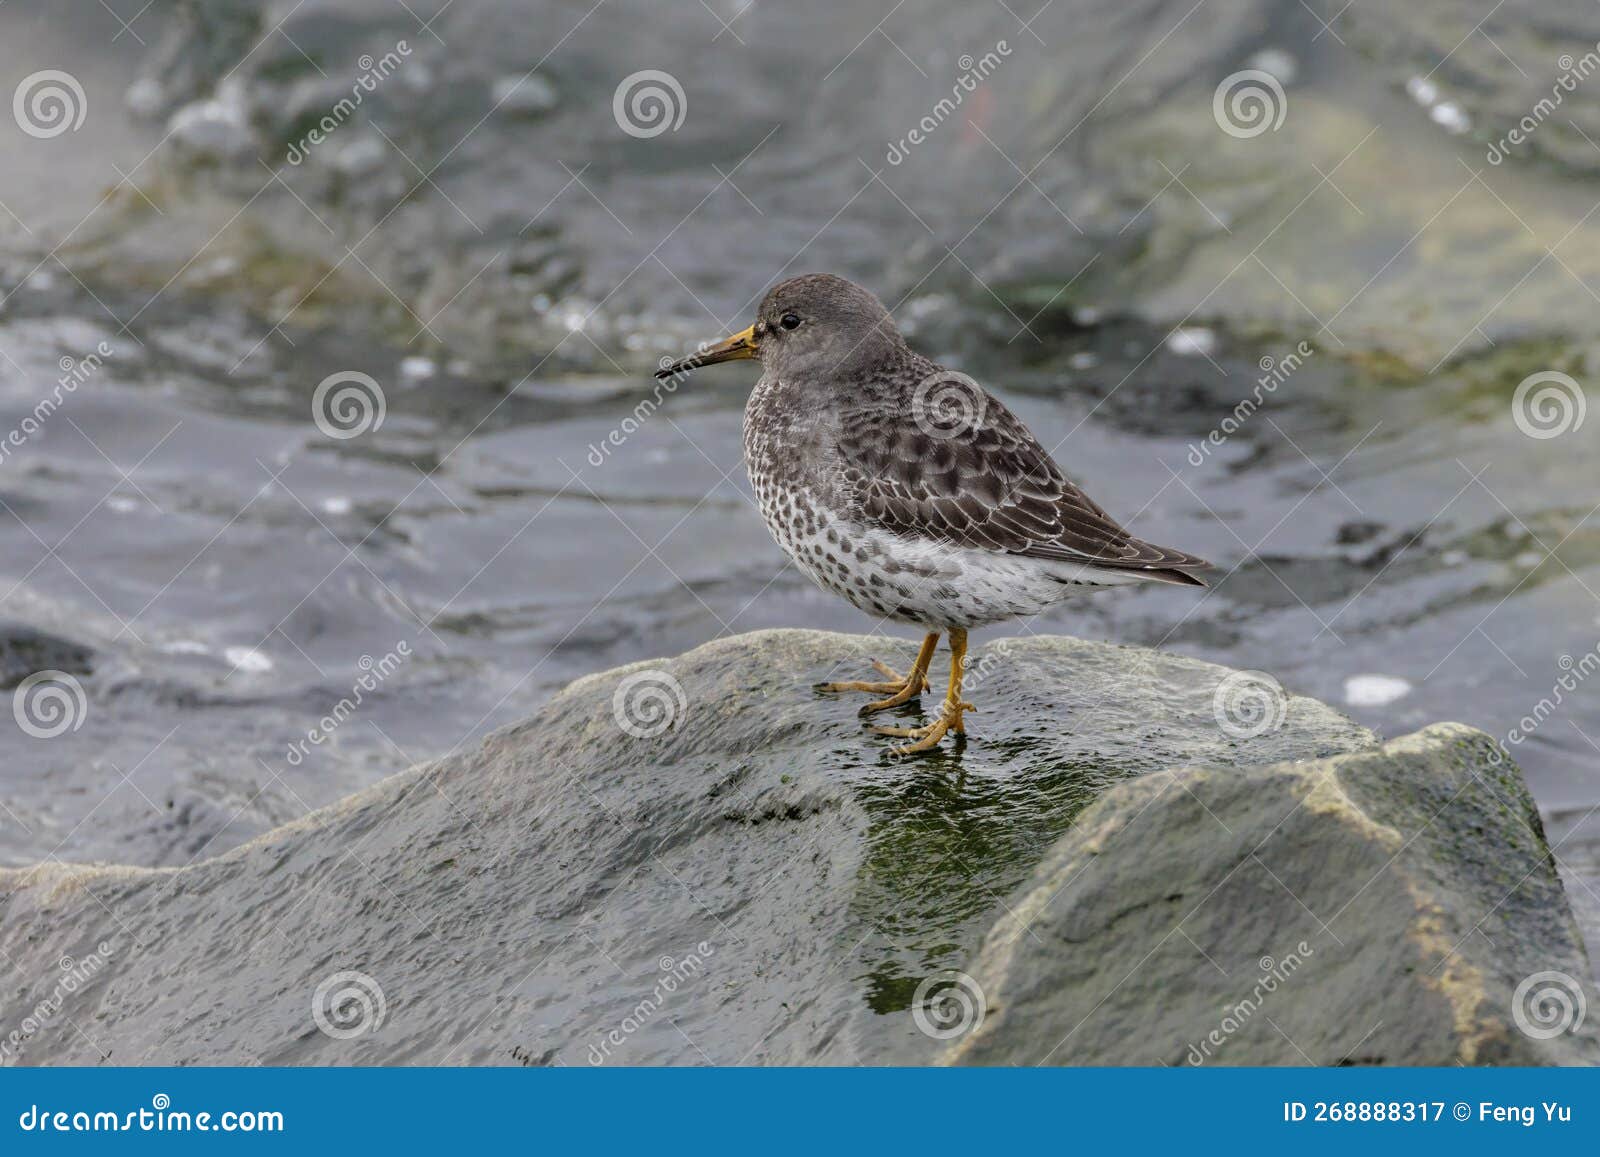 rock sandpiper shorebird